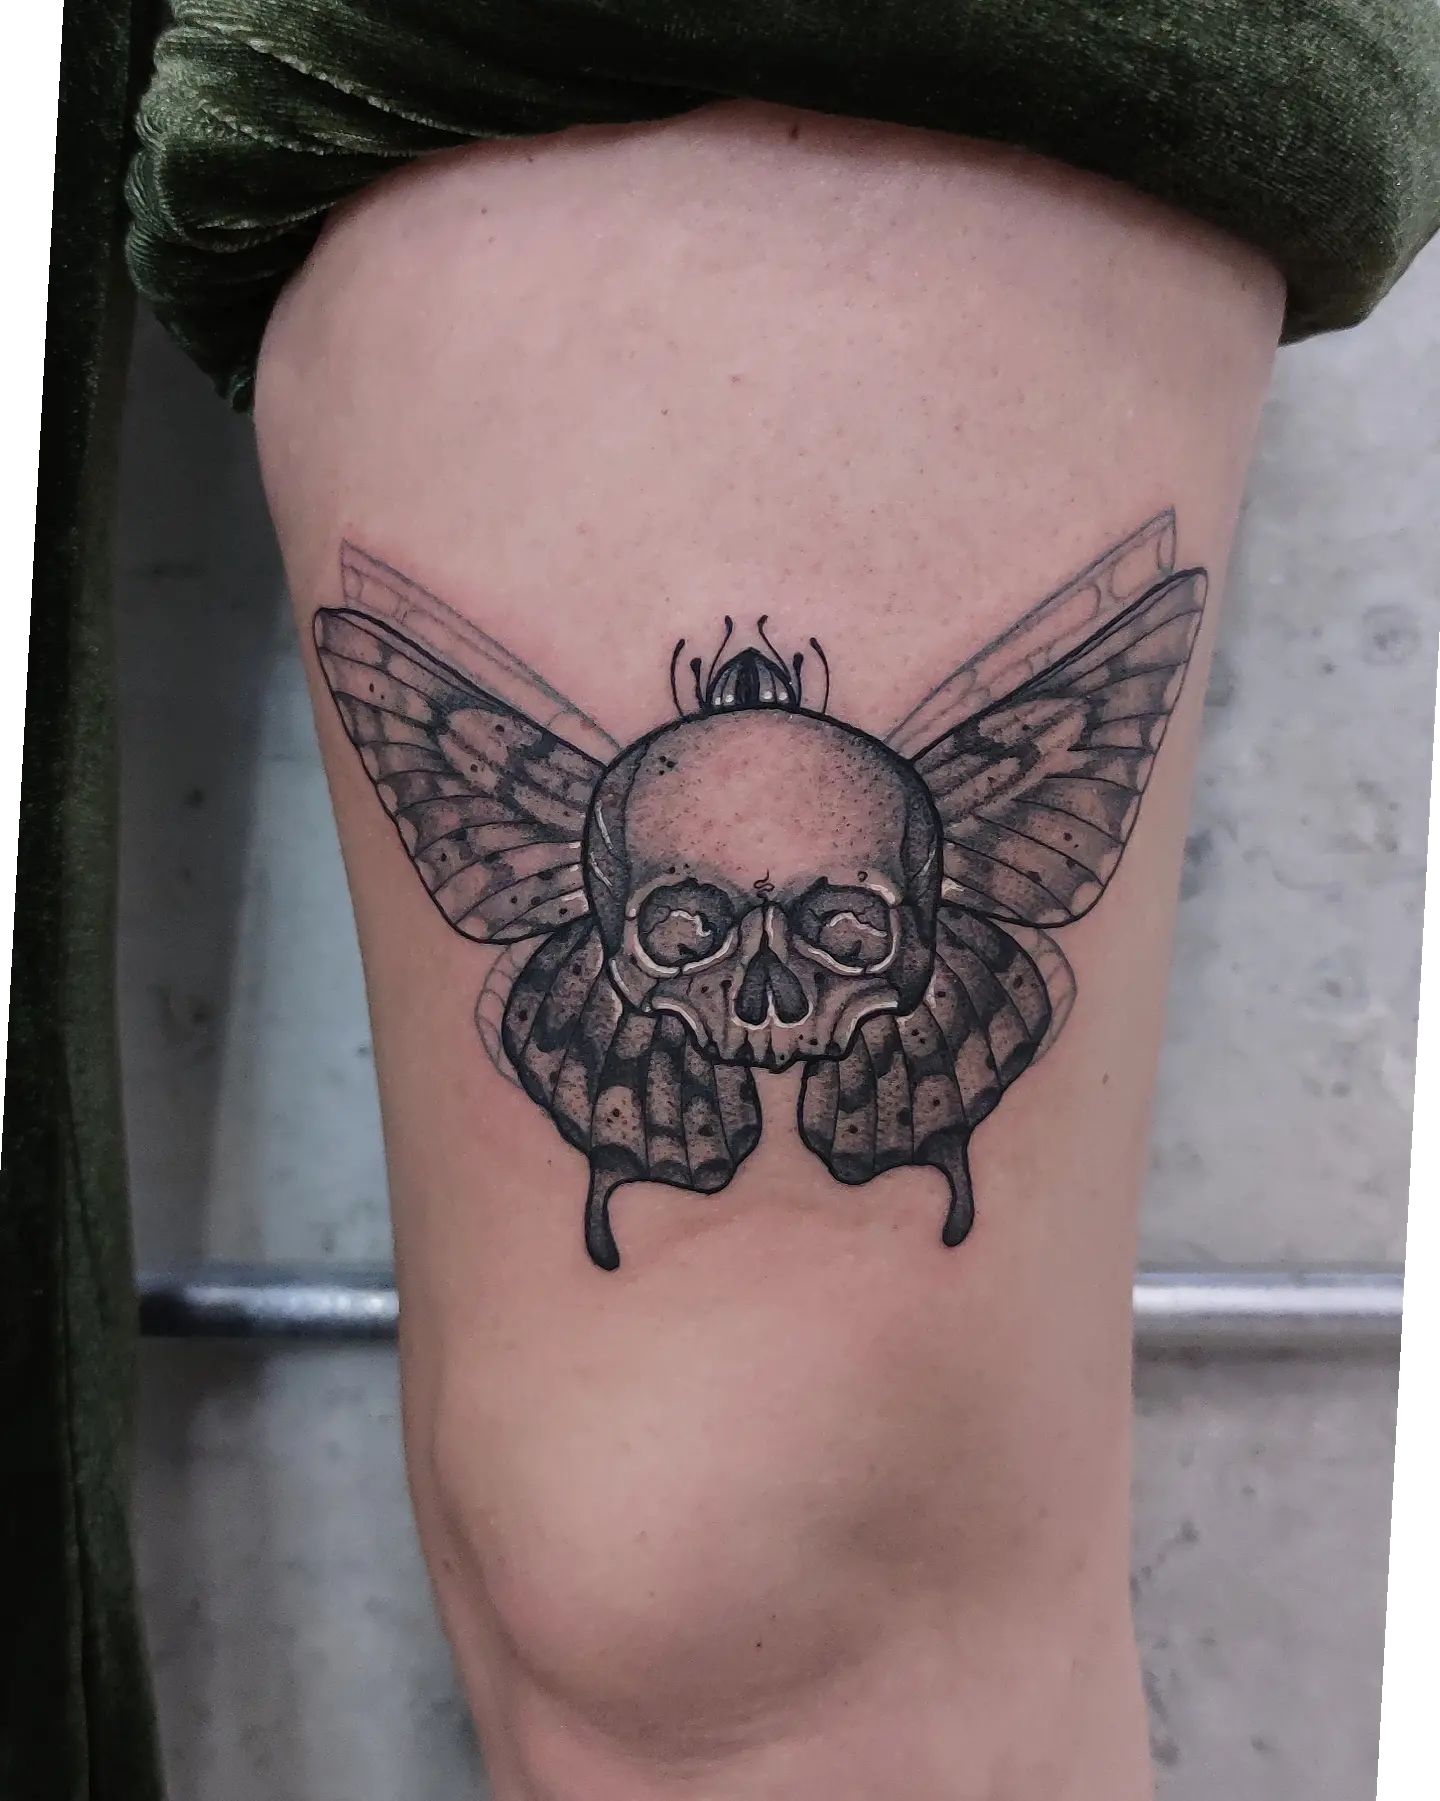 Tatuaje de mariposa con calavera.